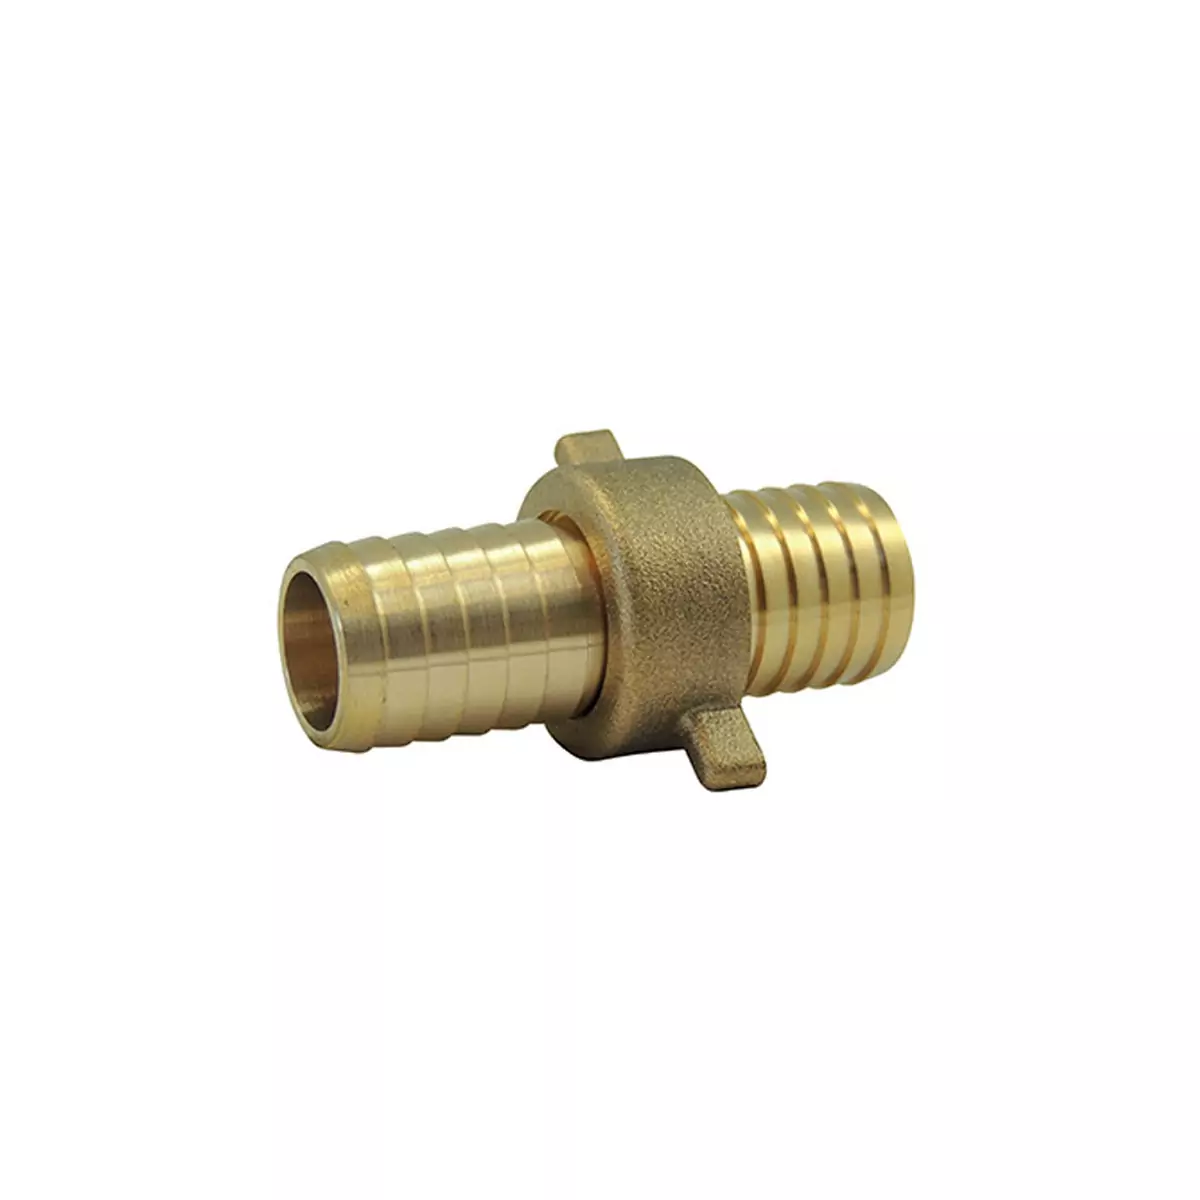 Splined Fittings: 2 Piece Swivel Connection with Elastomer Gasket Brass Wing Nut